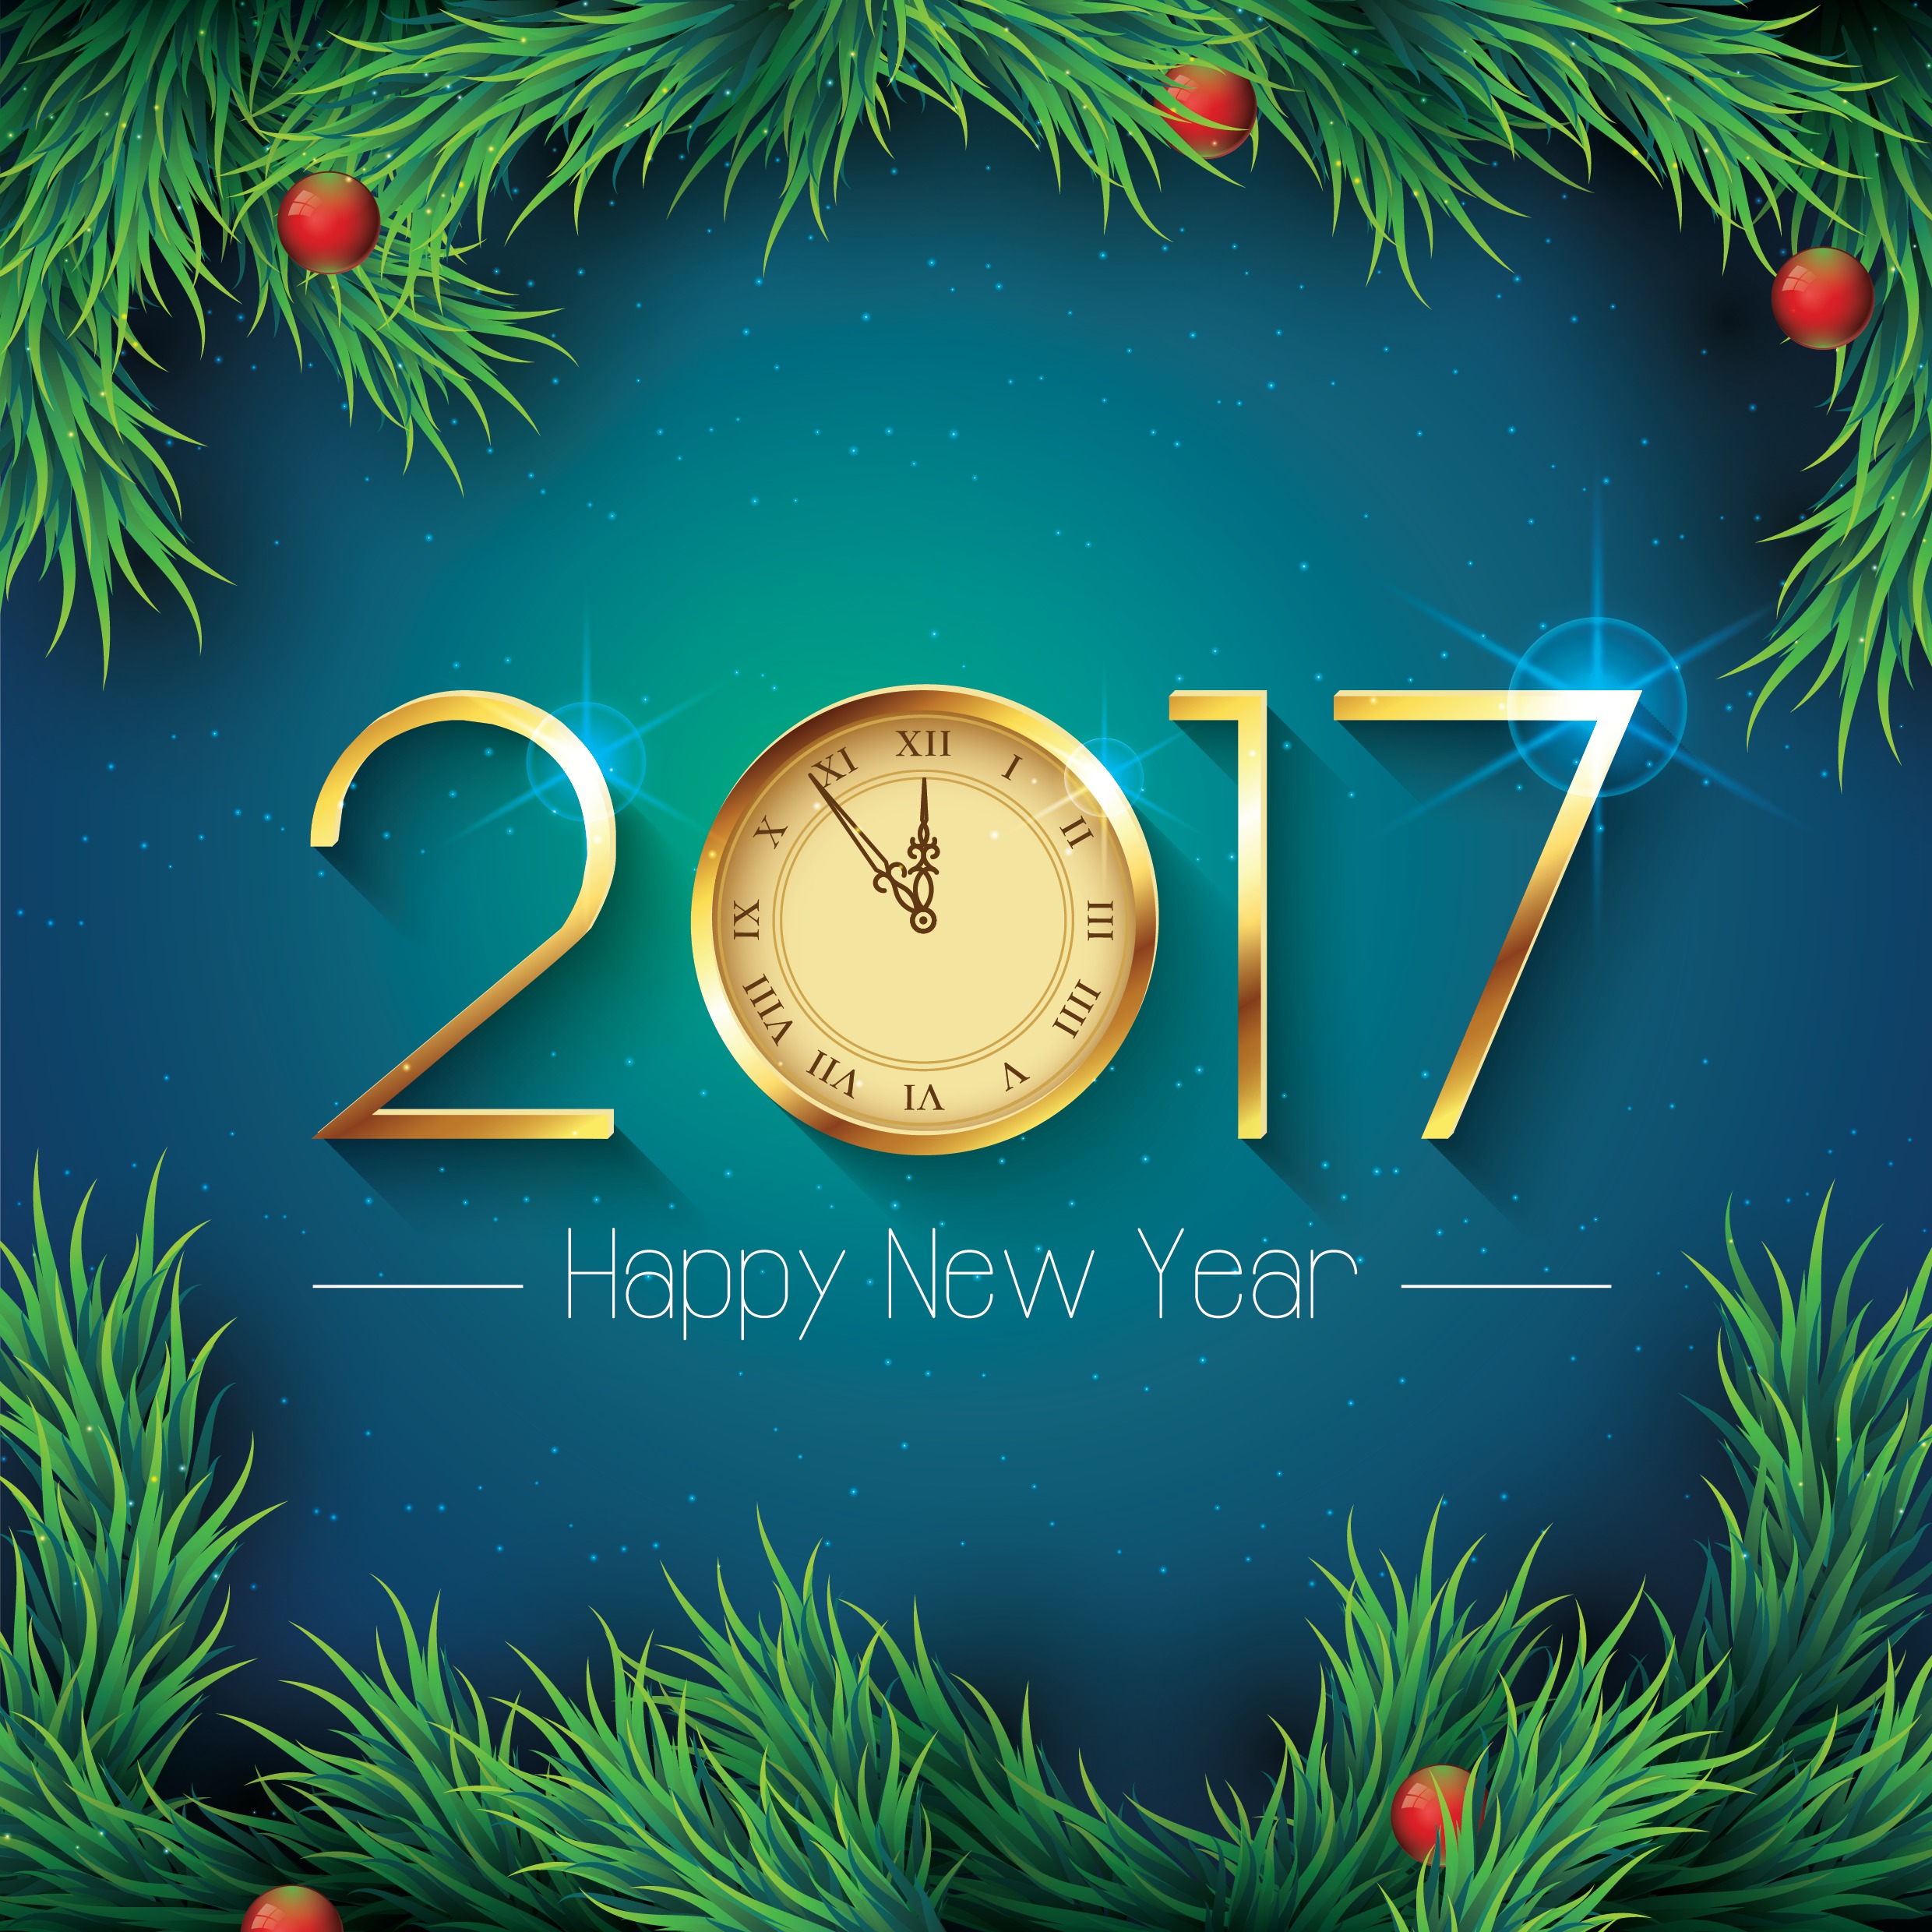 2017 Happy New Year Wallpaper